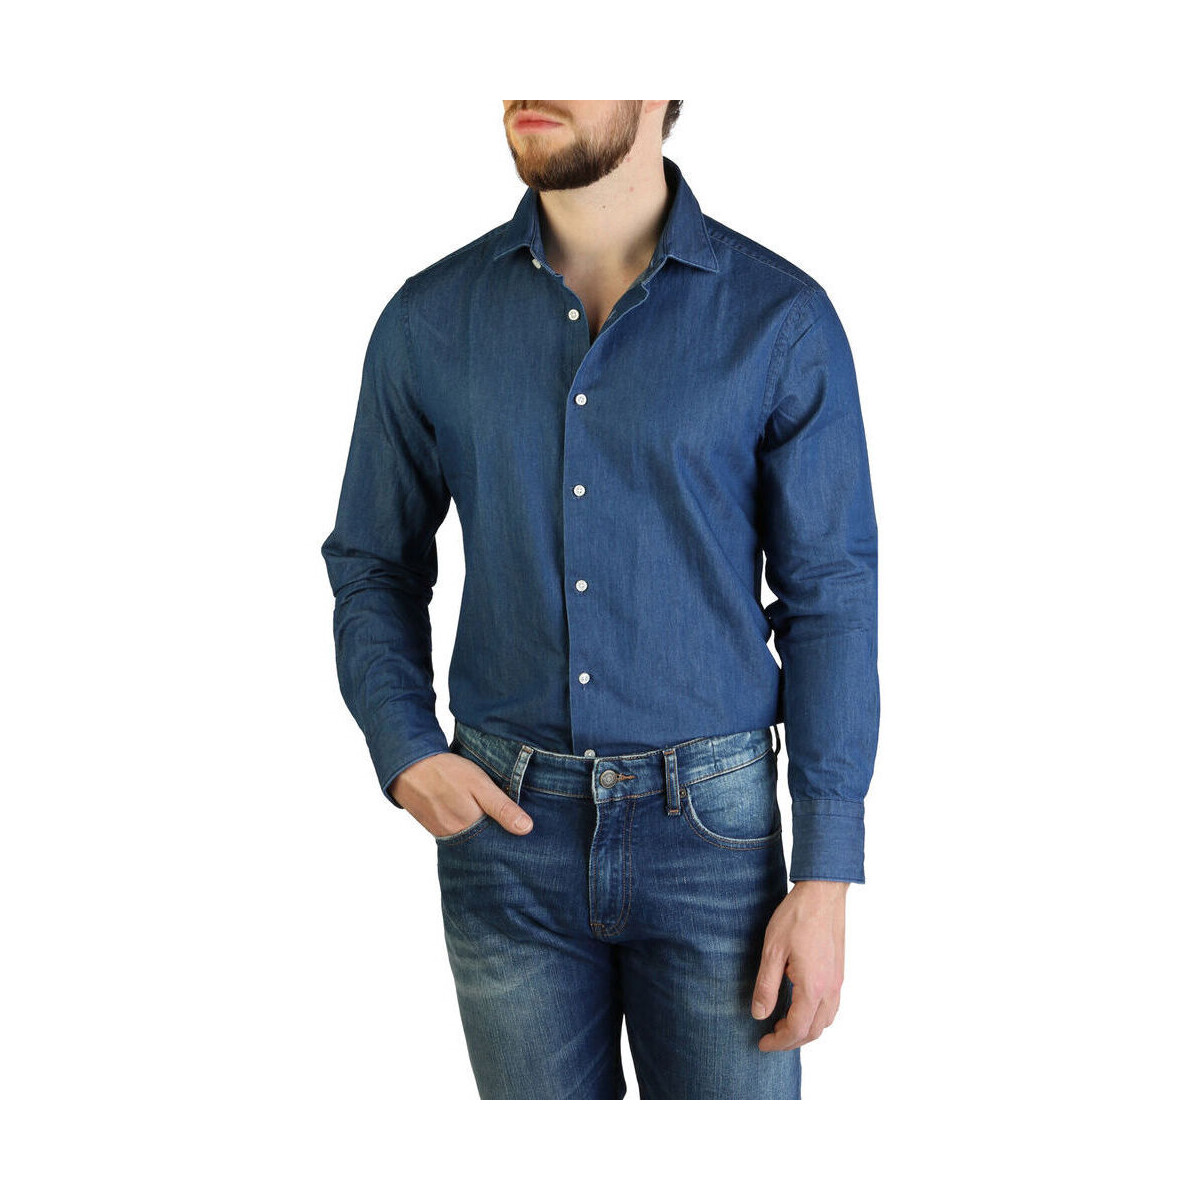 Abbigliamento Uomo Camicie maniche lunghe Tommy Hilfiger - tt0tt06009 Blu